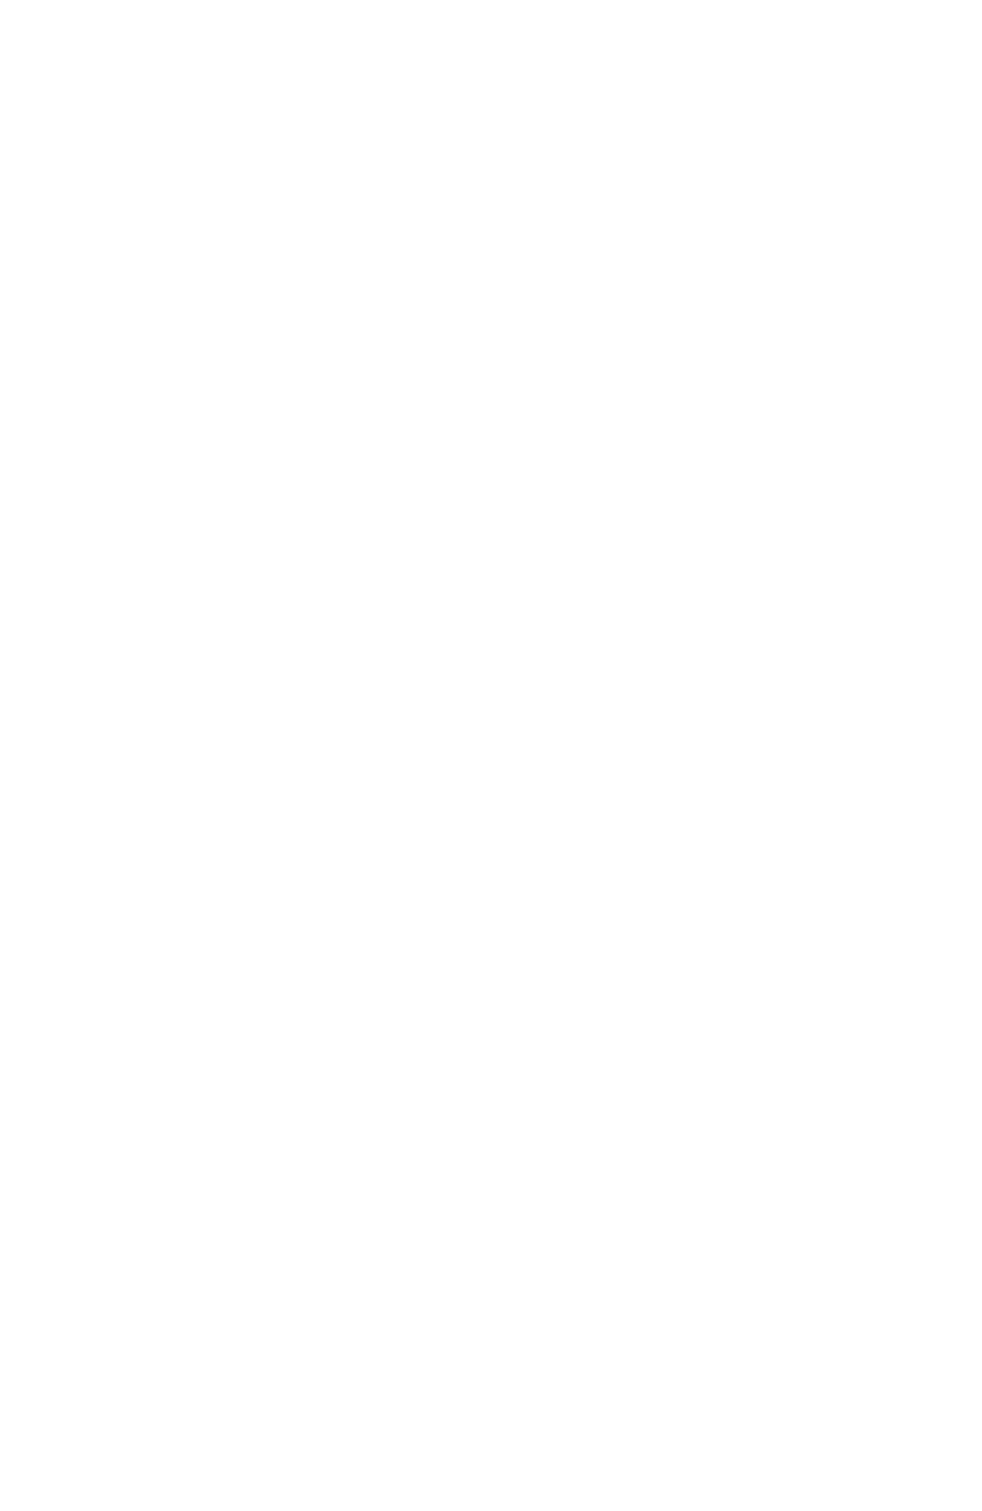 Lai Sun Development Company logo for dark backgrounds (transparent PNG)